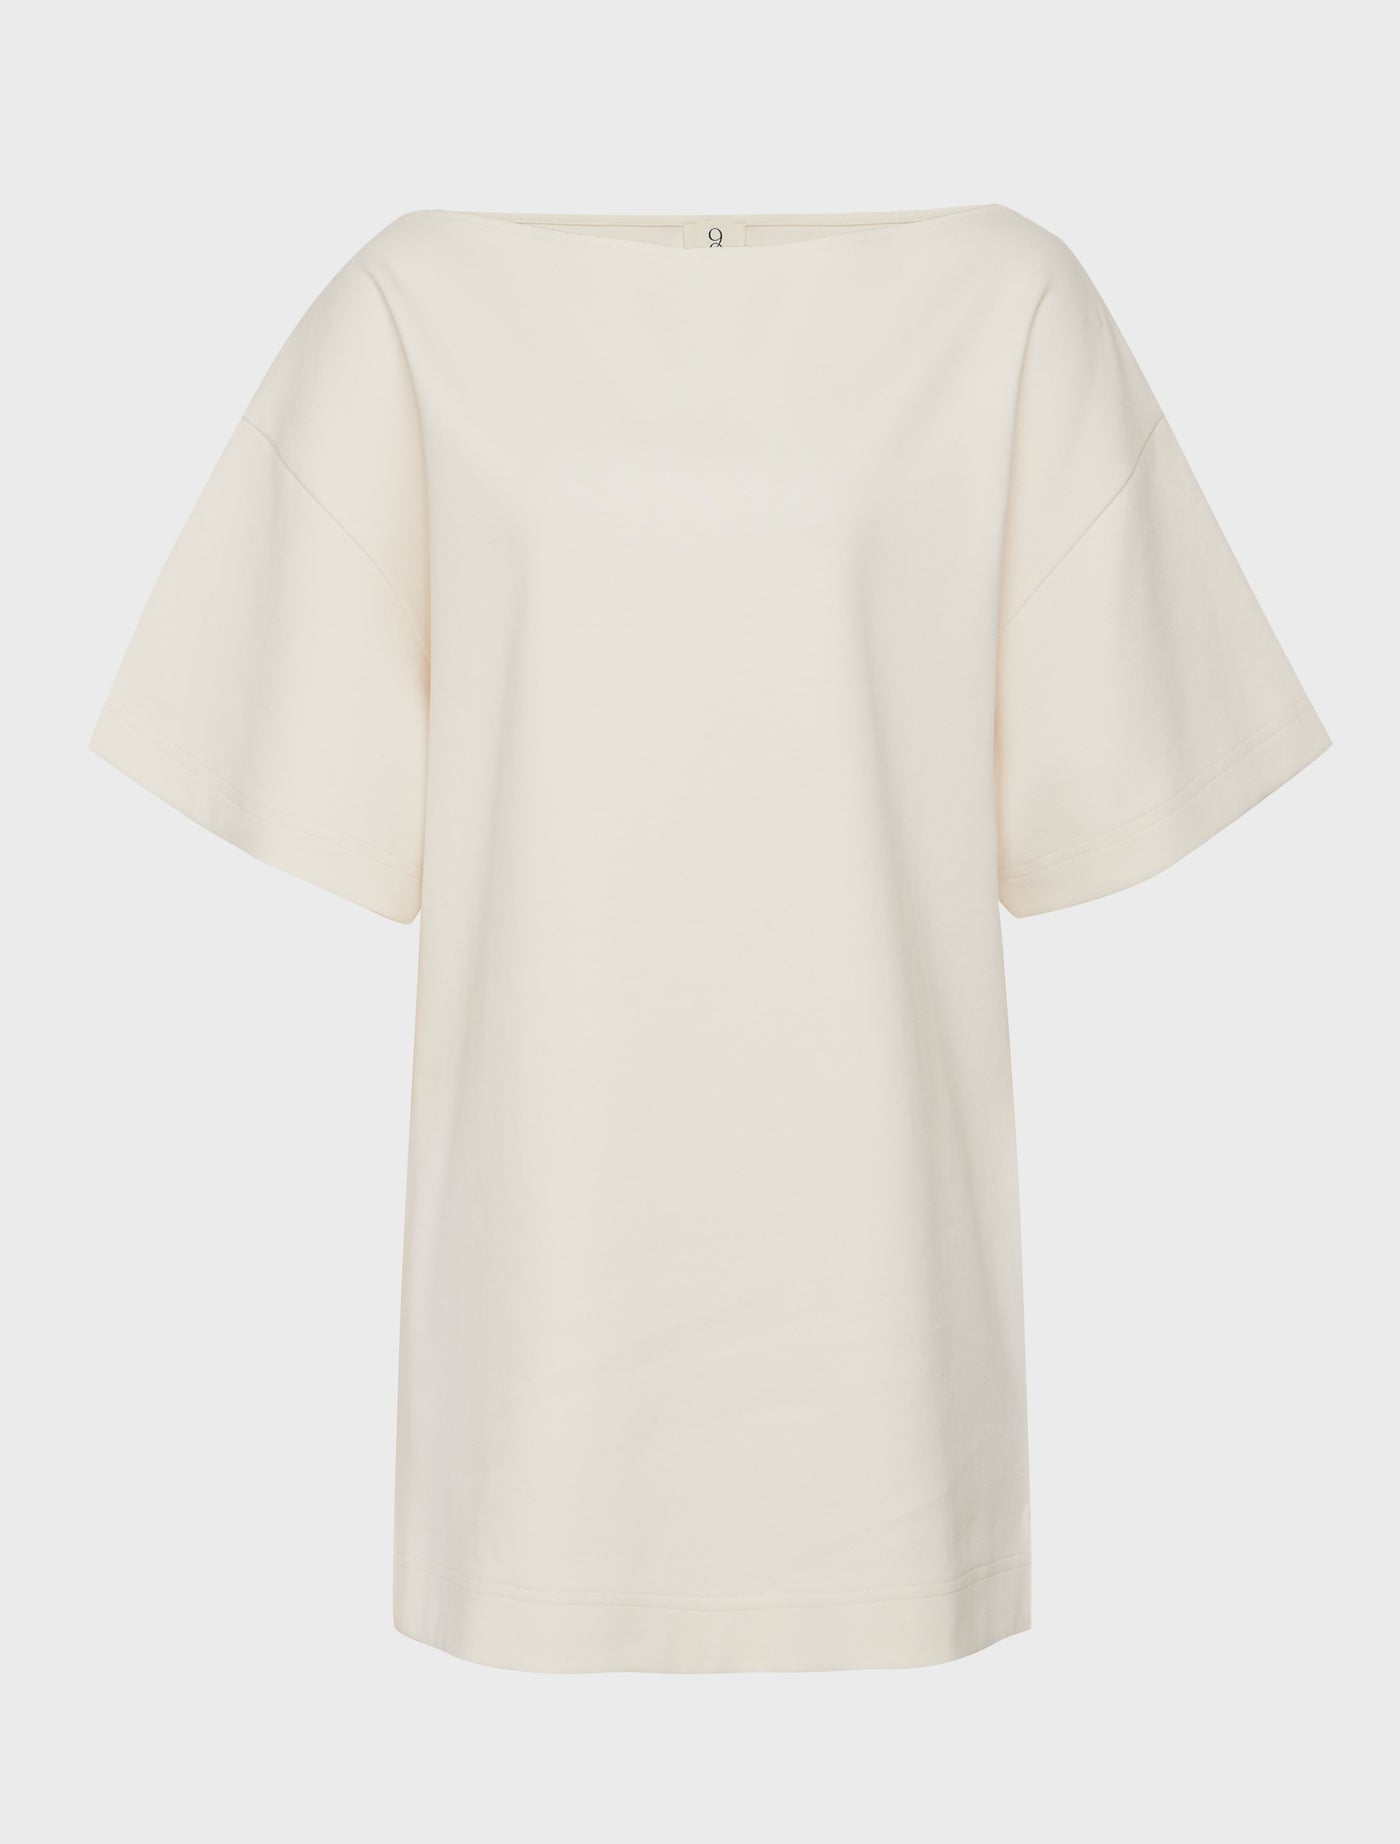 Gabo Organic Cotton T-Shirt in White